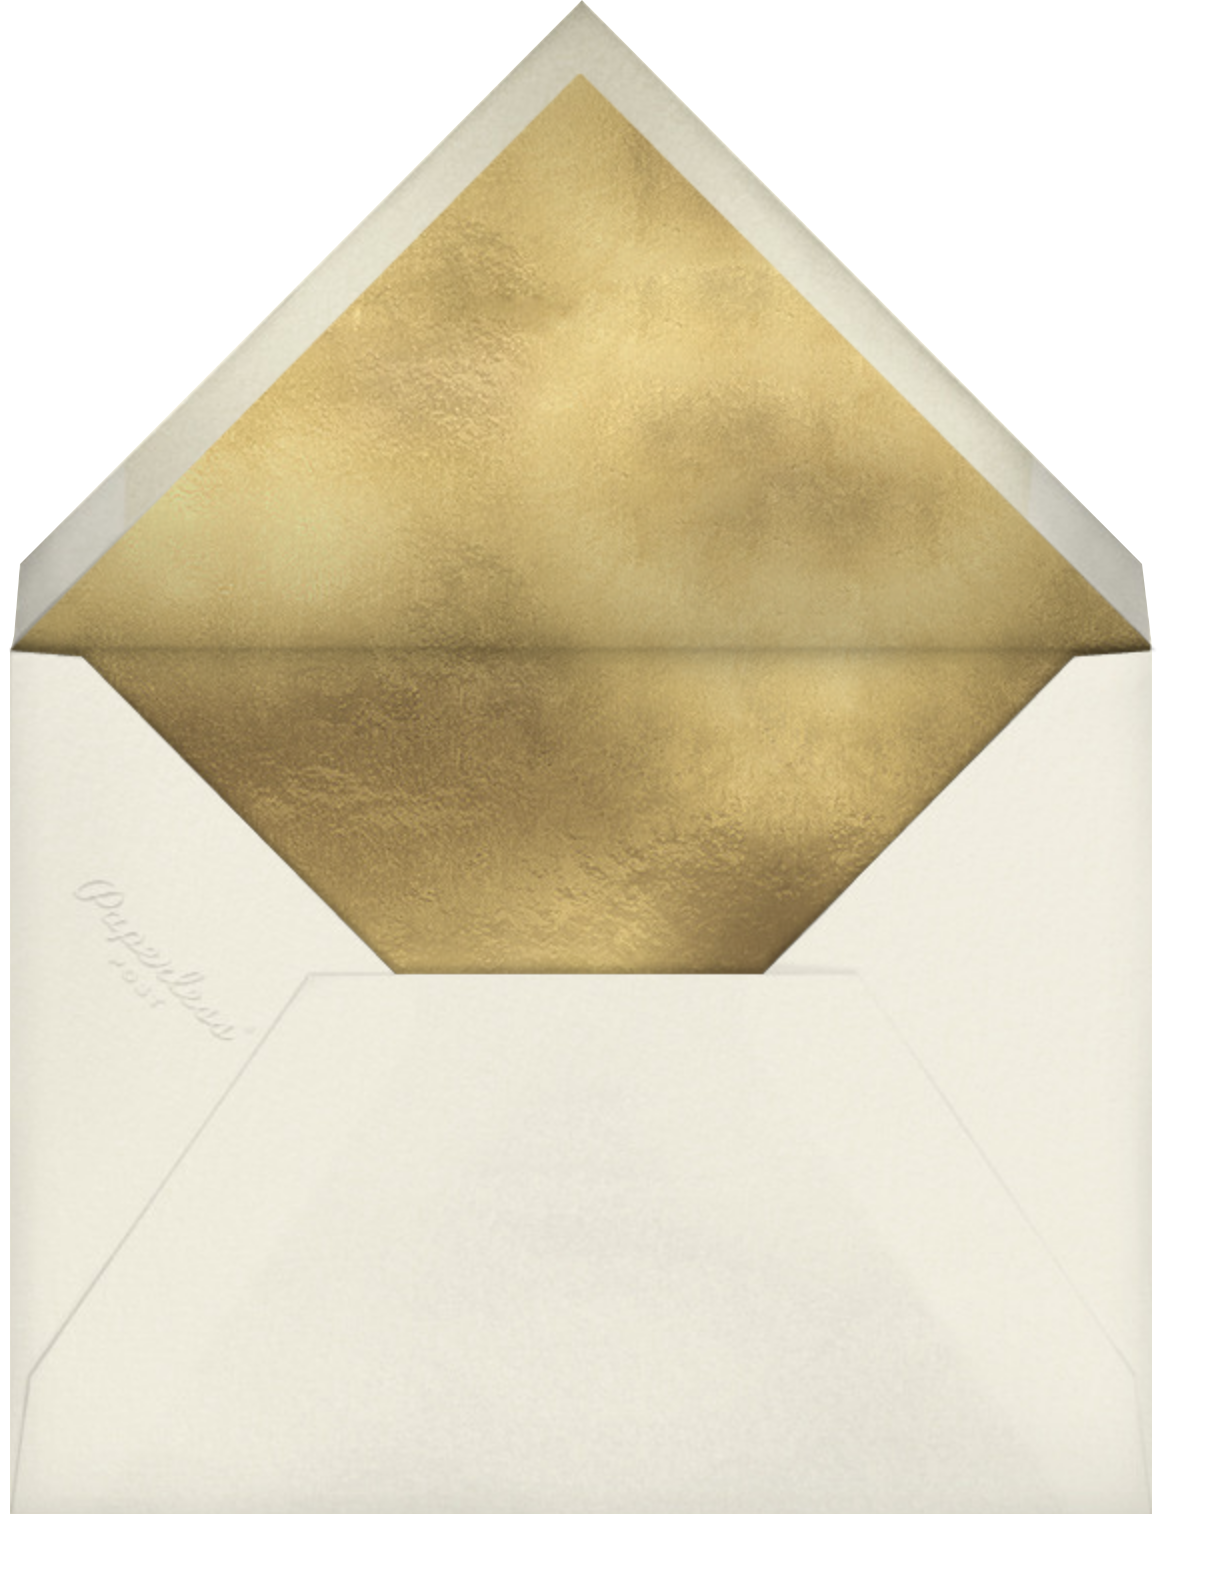 Confetti Ceremony - kate spade new york - Envelope